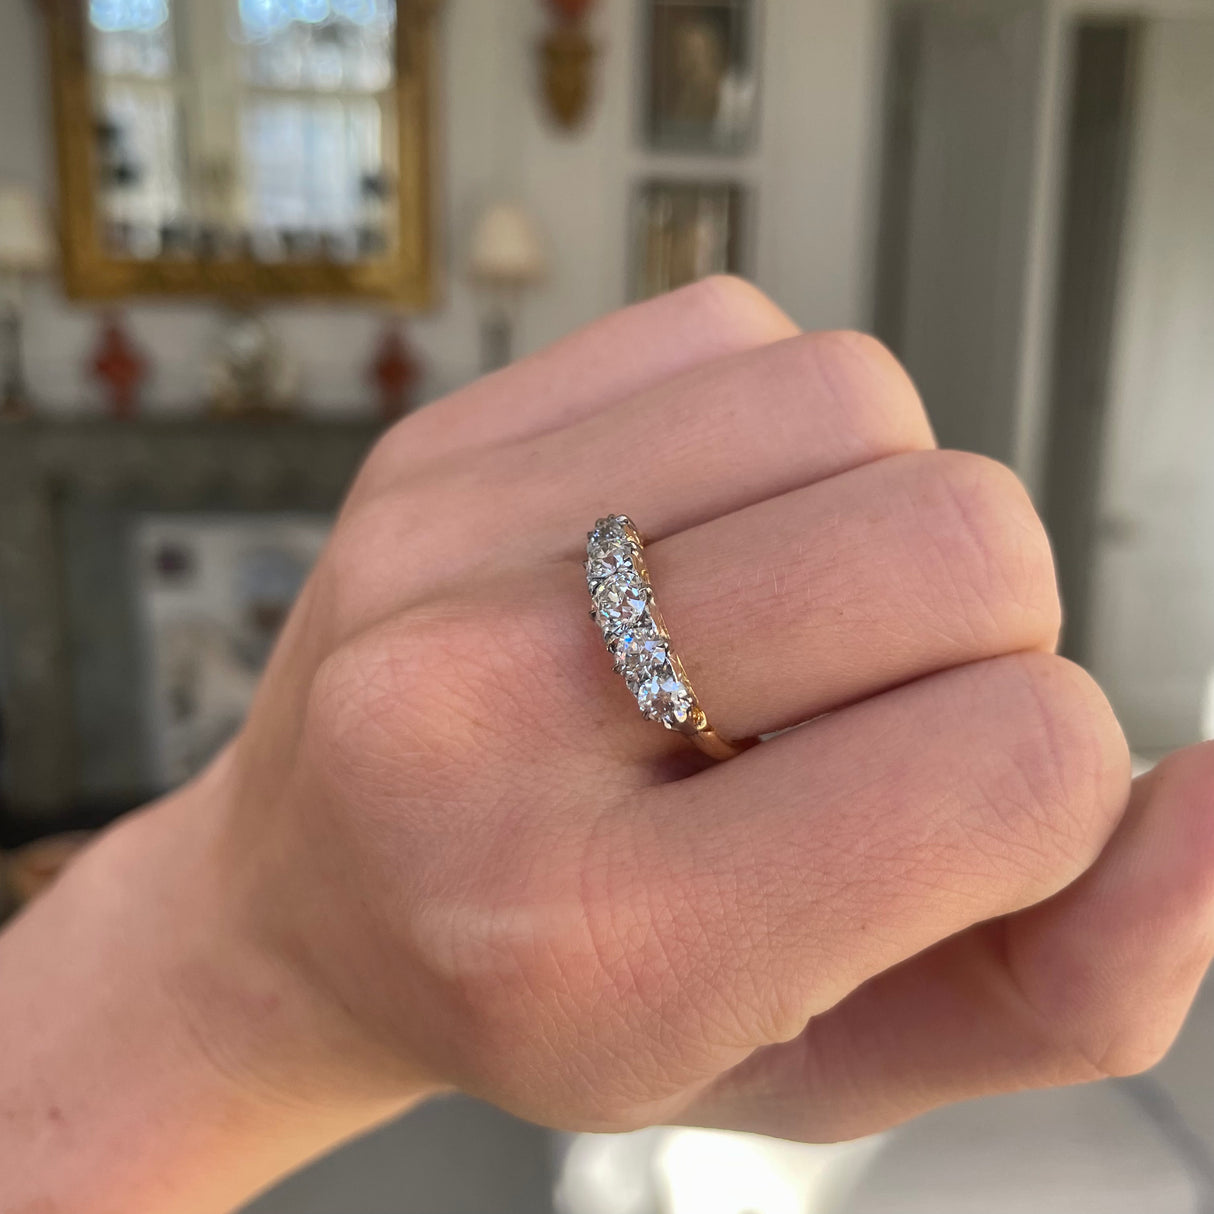 Victorian five-stone diamond engagement ring, worn on hand.